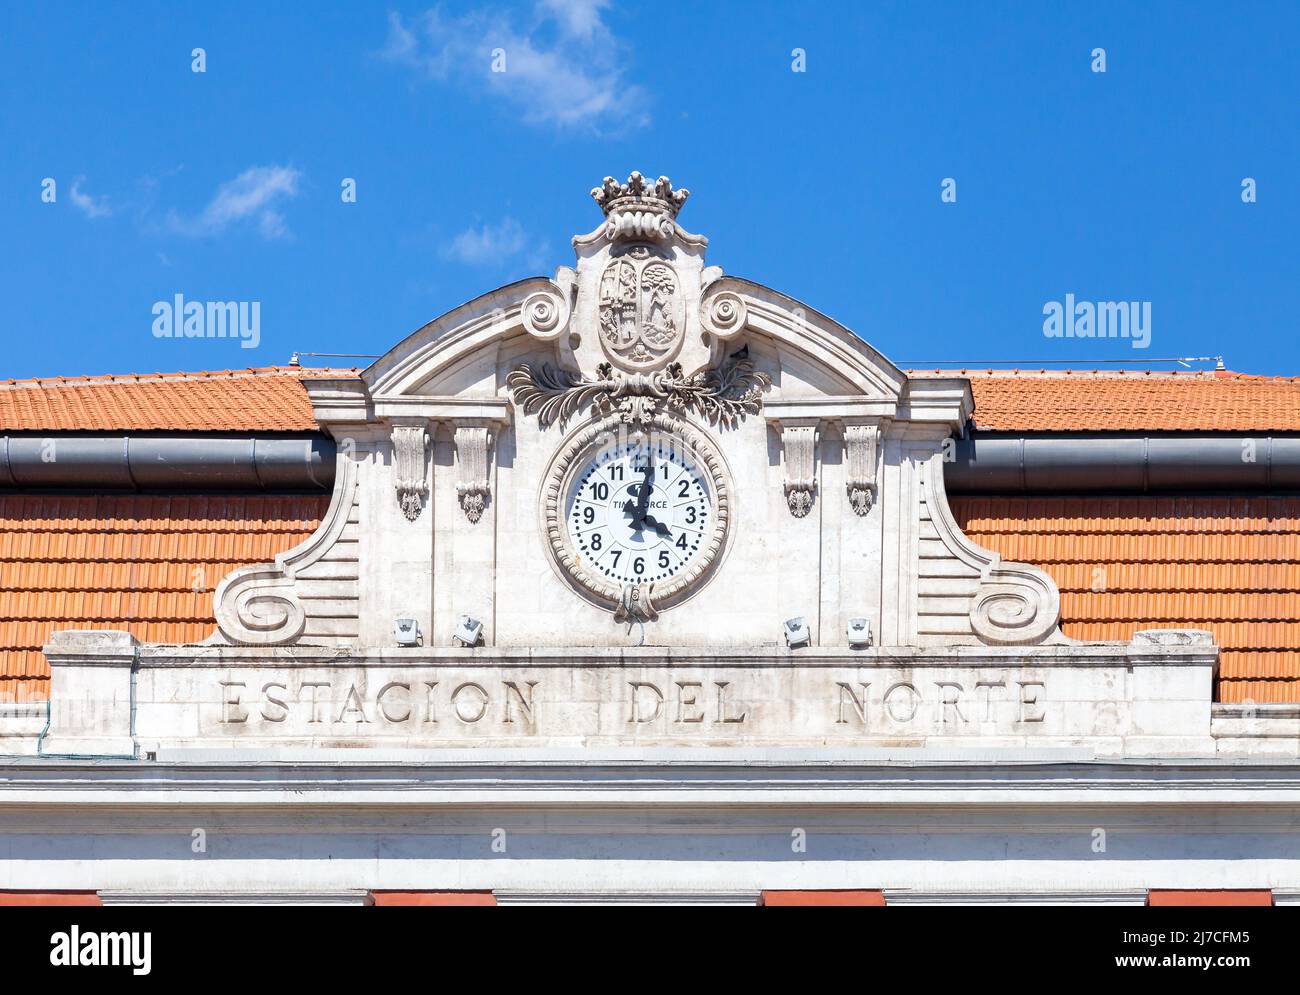 Estacion del Norte, Madrid, detail of the facade Stock Photo